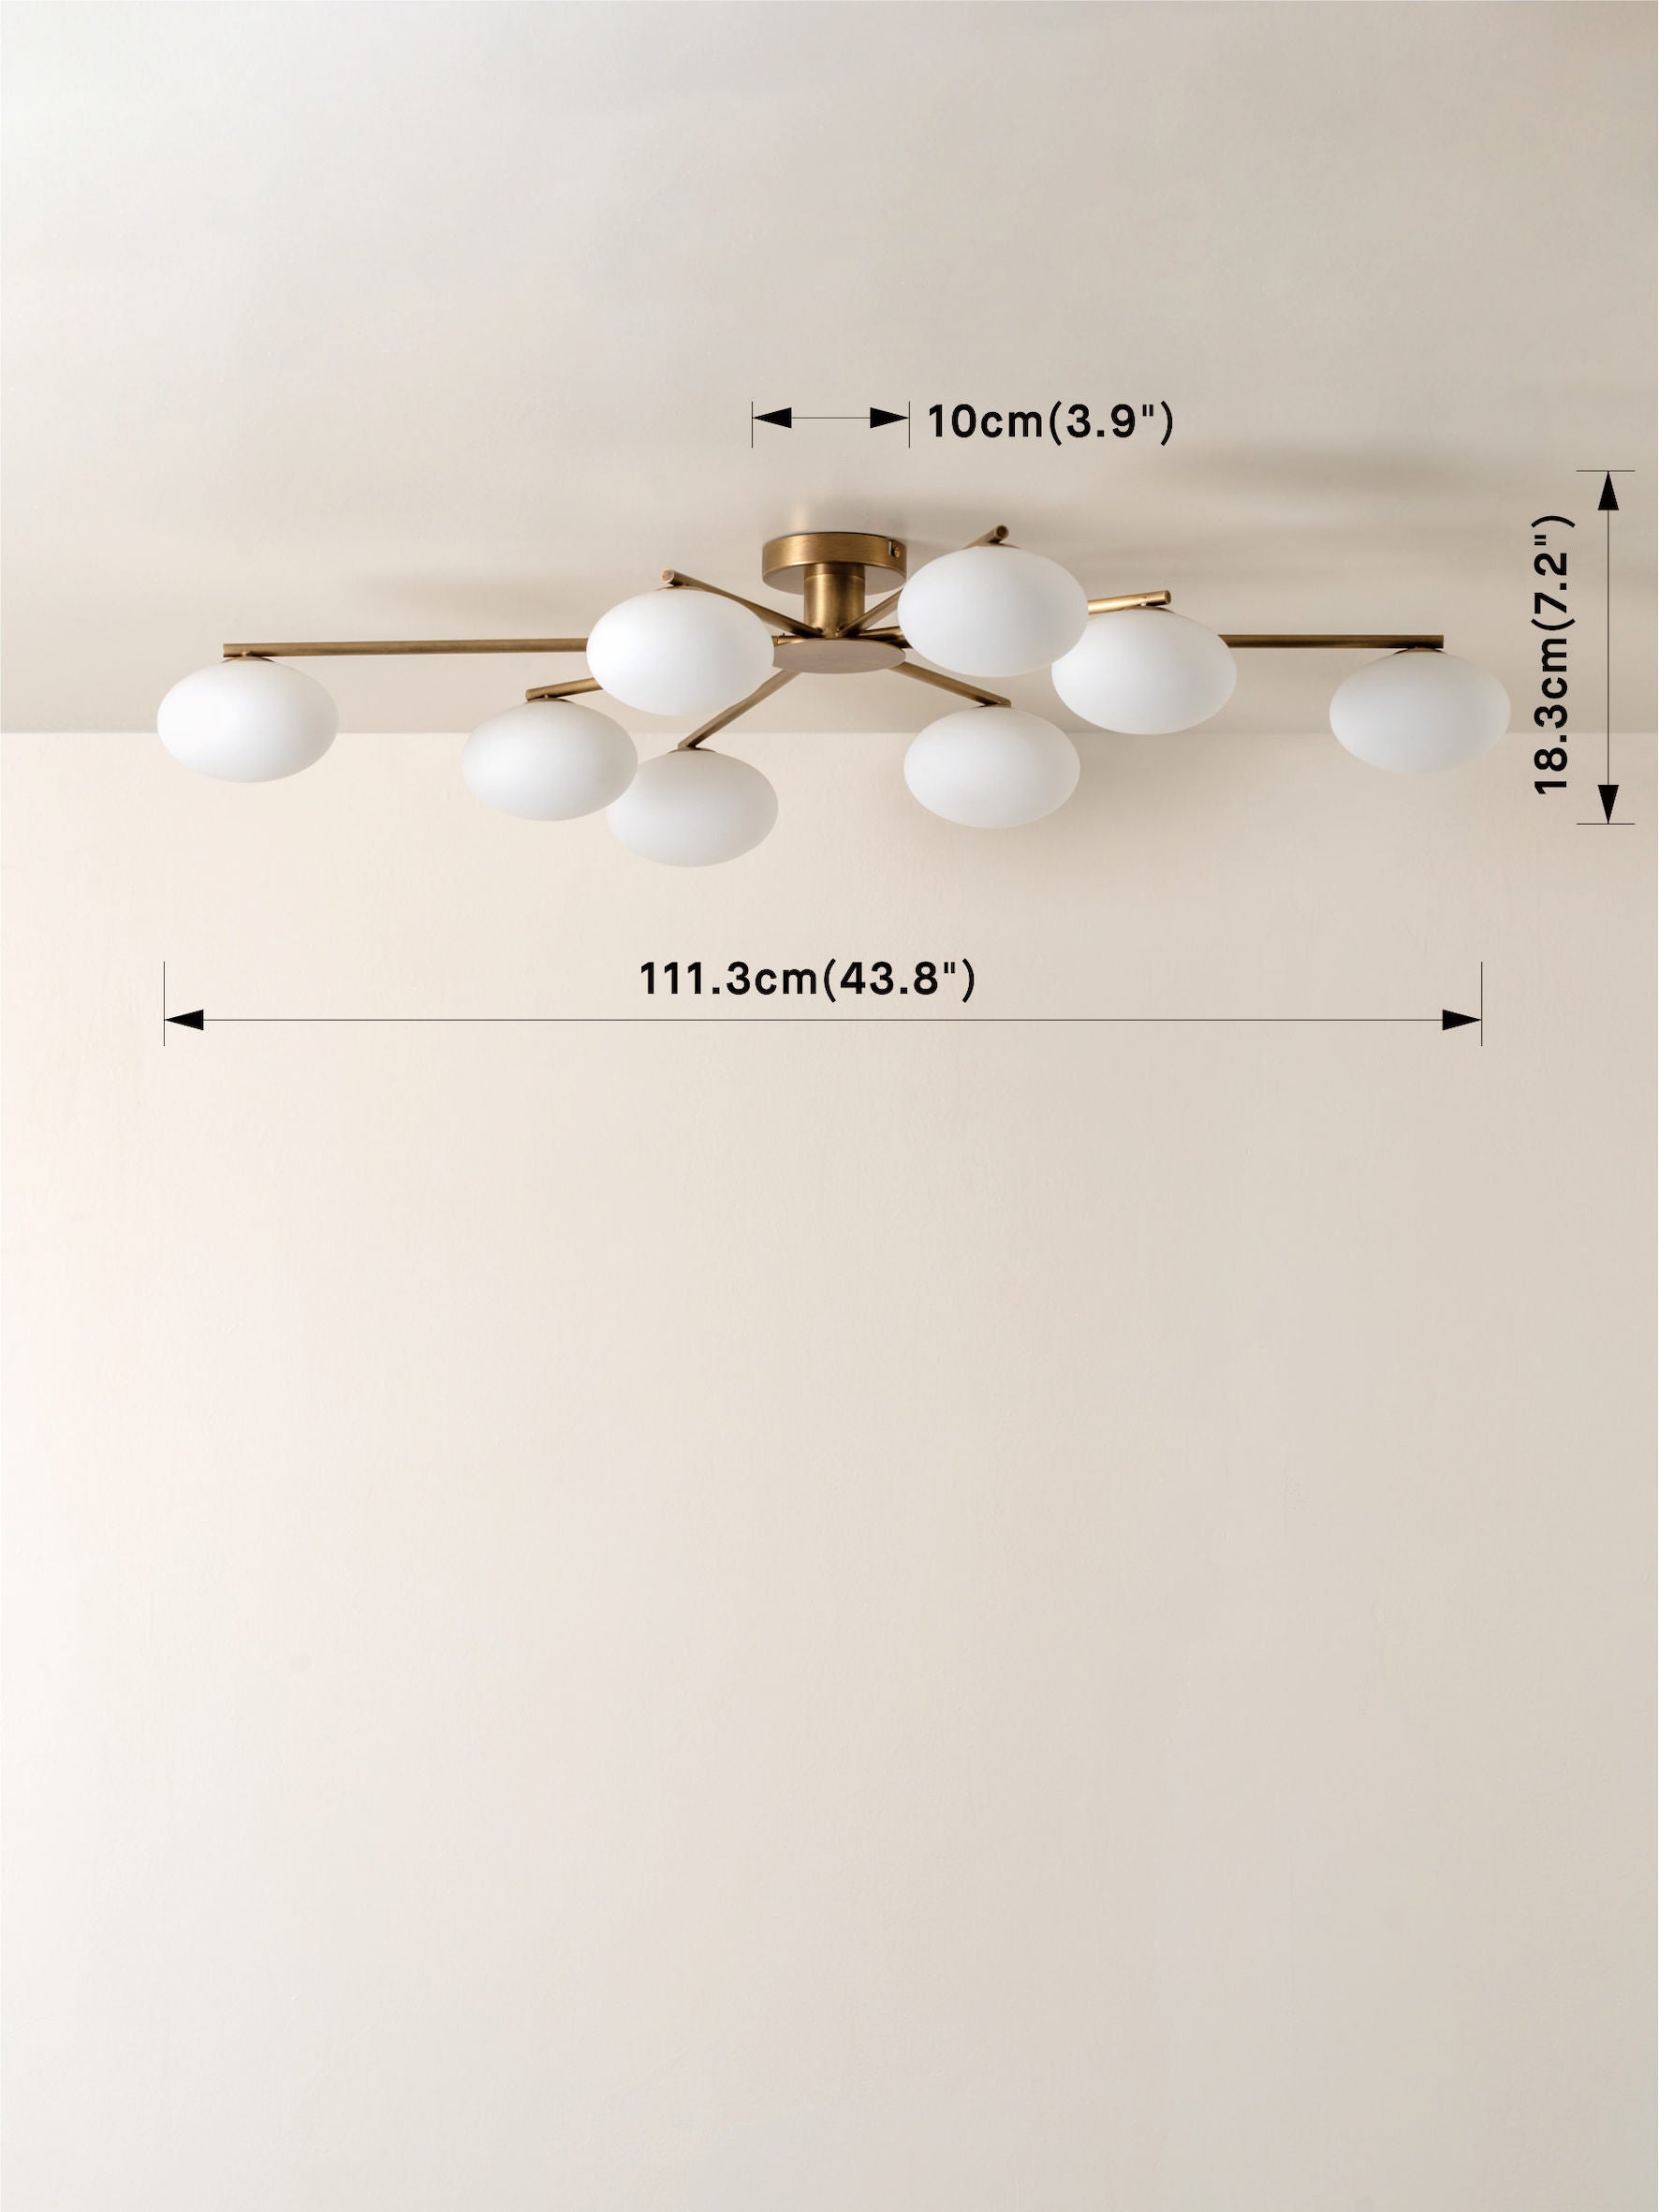 Imperial - 8 light aged brass and opal flush pendant | Ceiling Light | Lights & Lamps | UK | Modern Affordable Designer Lighting